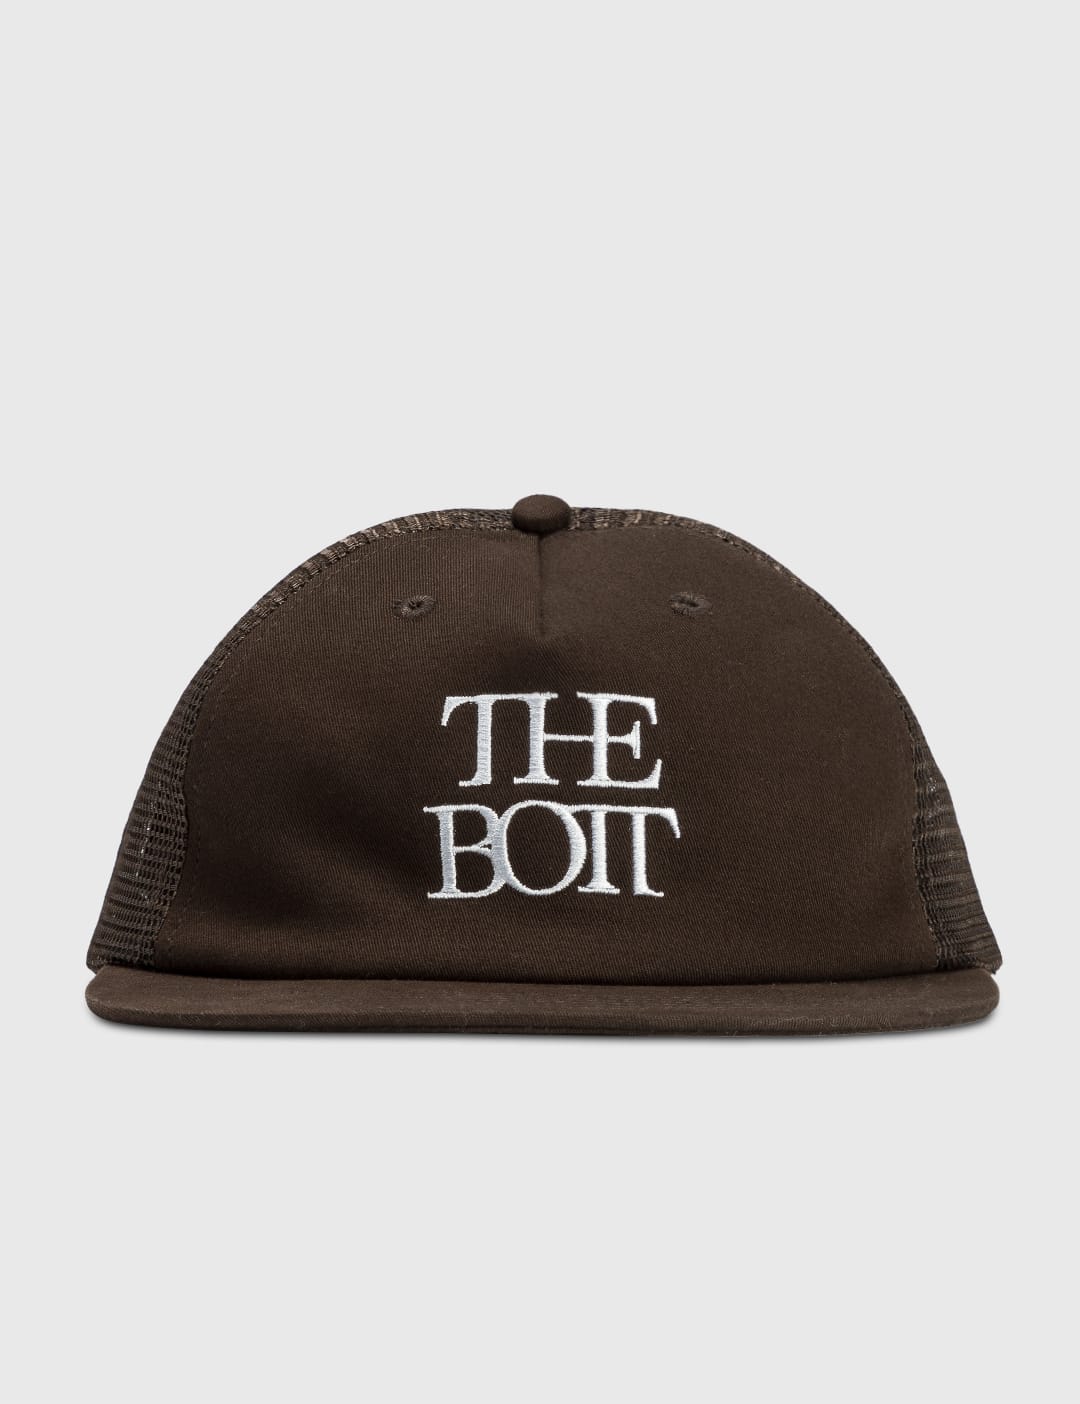 BoTT - The BoTT Mesh Cap | HBX - Globally Curated Fashion and 